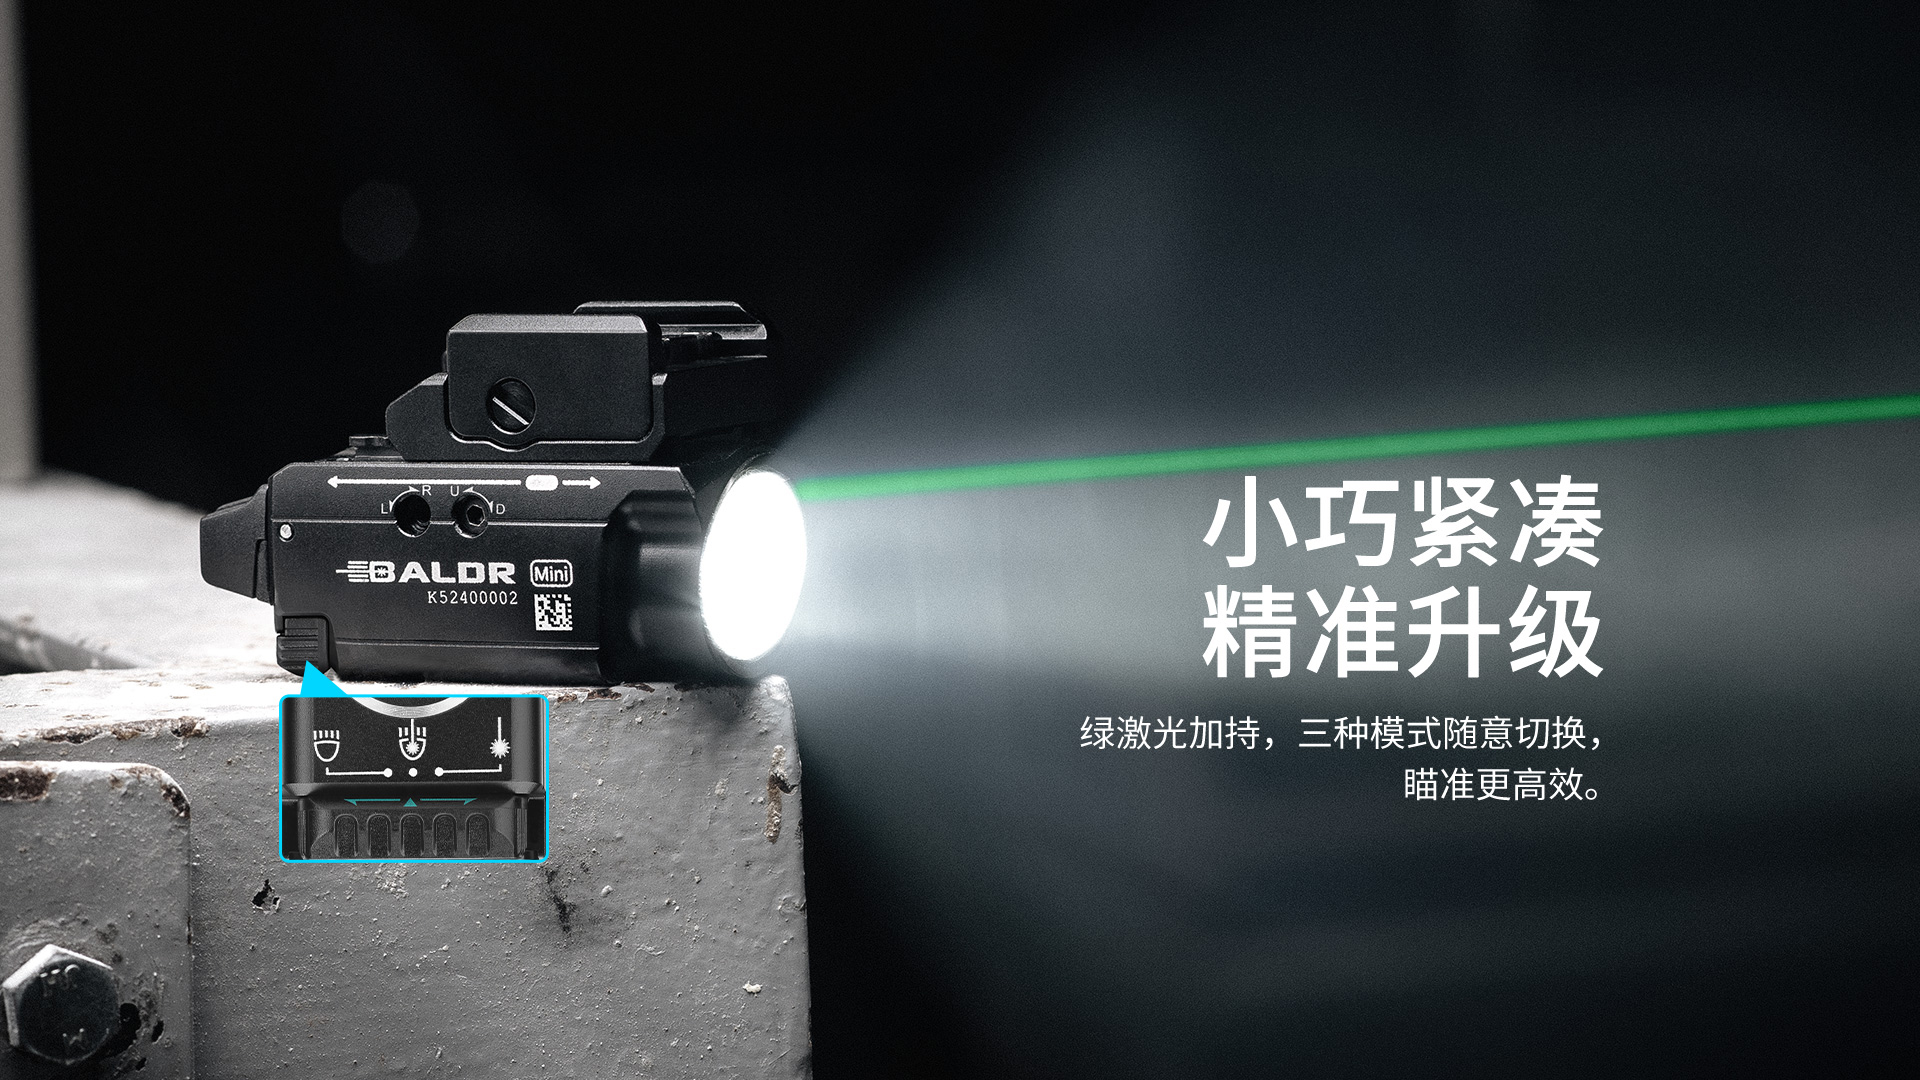 Olight Baldr Mini 600流明 綠激光瞄準 迷你手槍燈 磁充 1913 /GL槍軌 生存遊戲